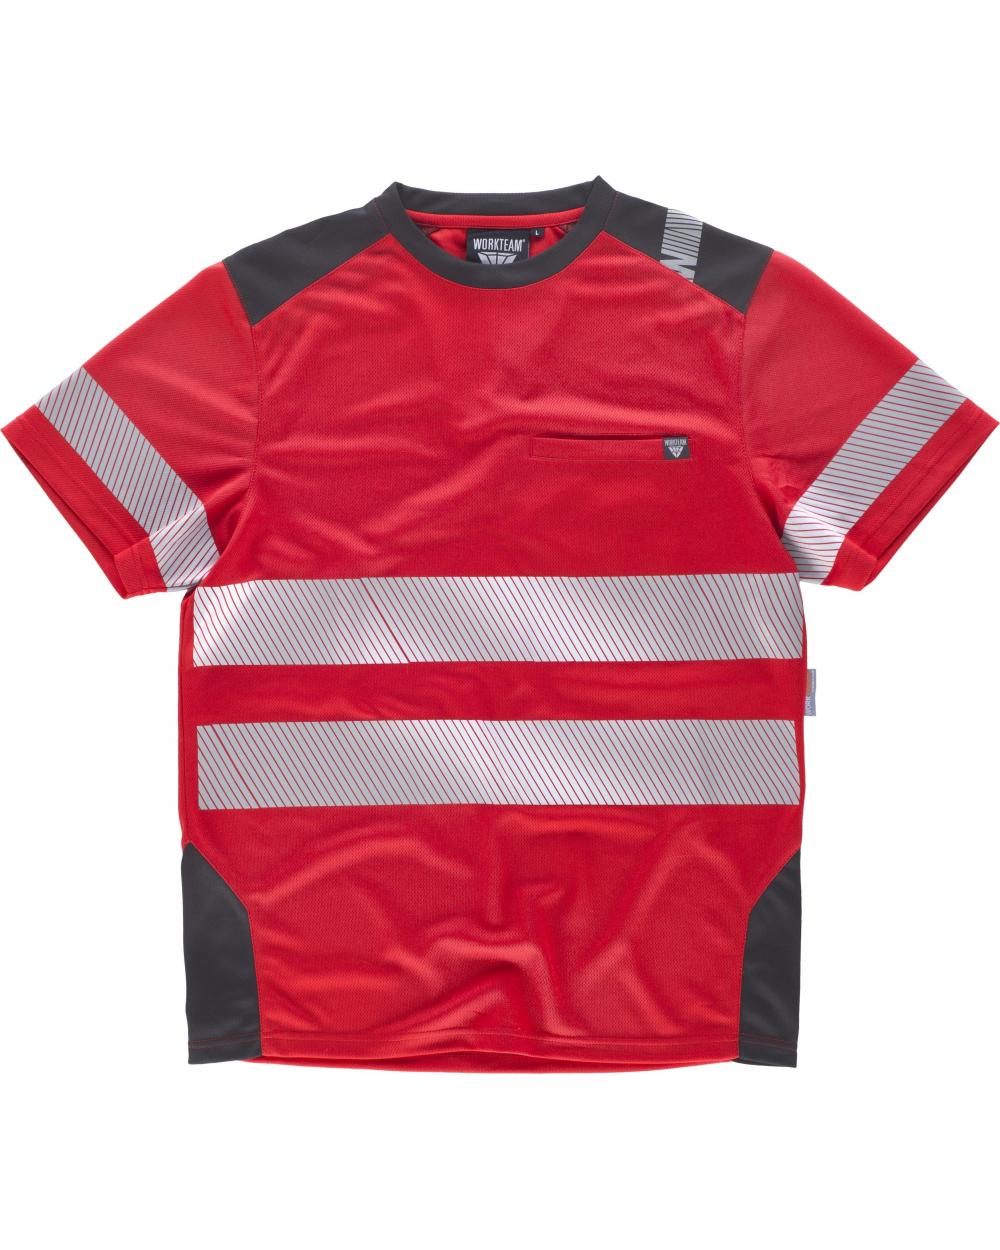 Comprar Camiseta transpirable con cintas discontinuas C2942 Rojo+Gris Oscuro workteam delante